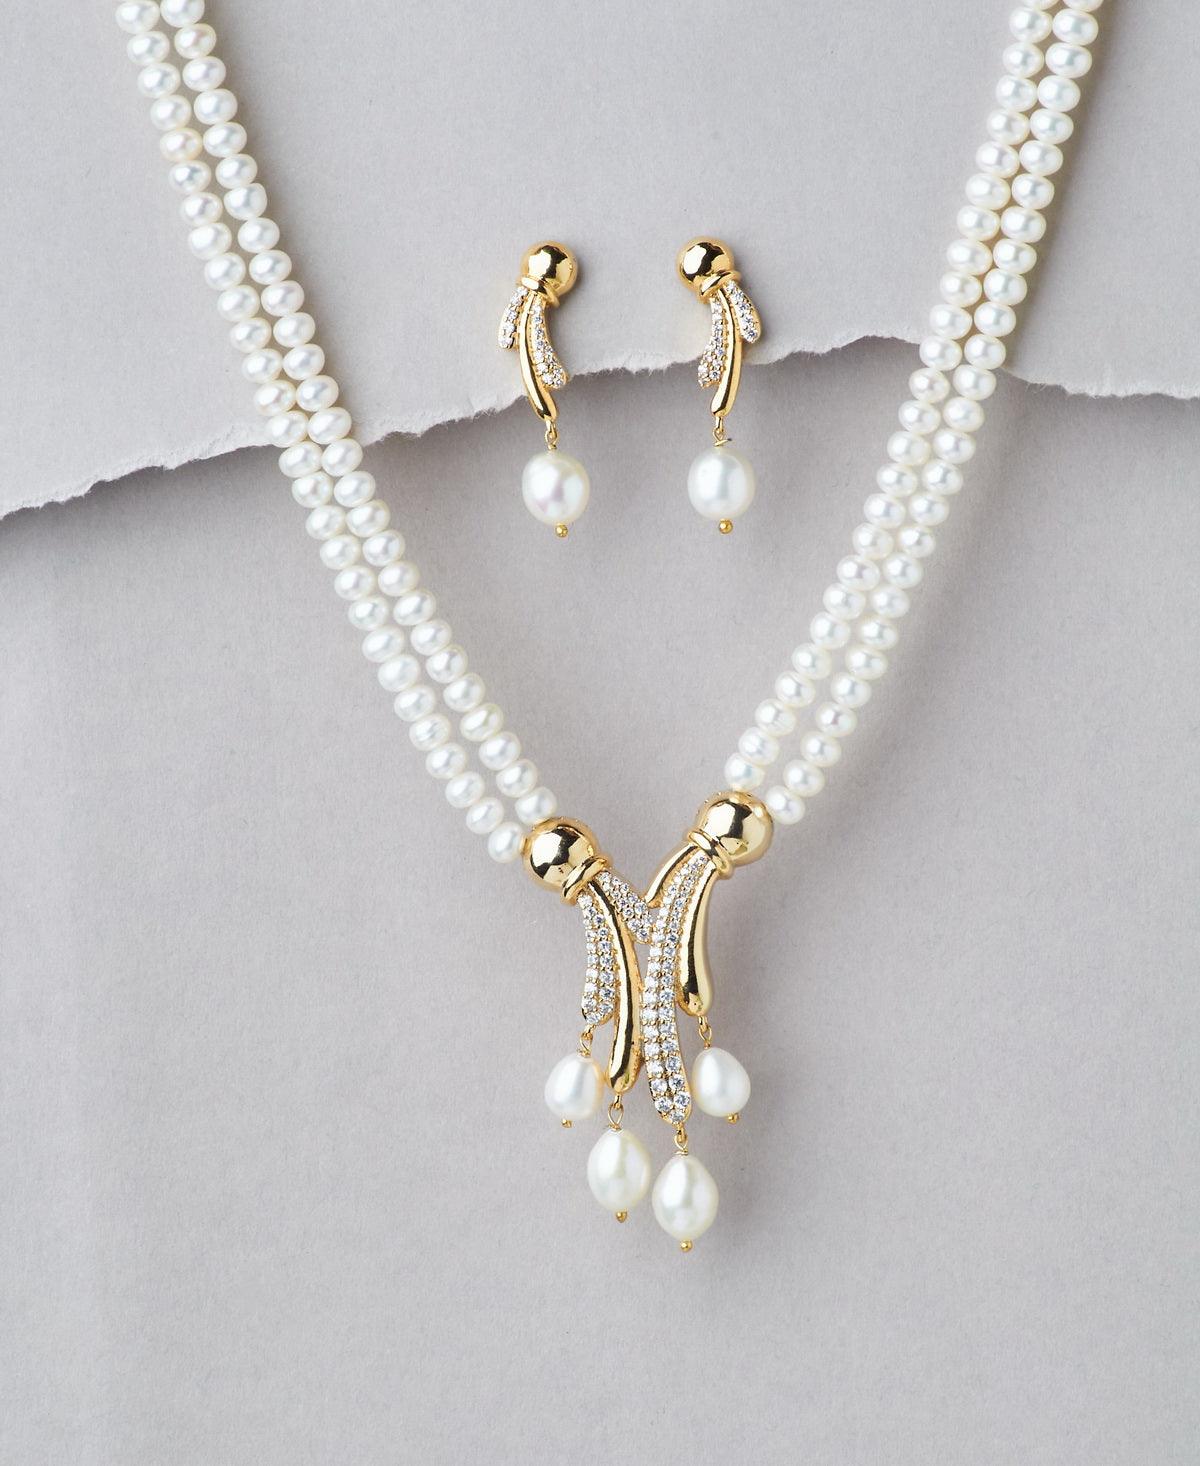 Wholesale Vintage Rhinestone Pearl Necklace Earrings Jewelry Set